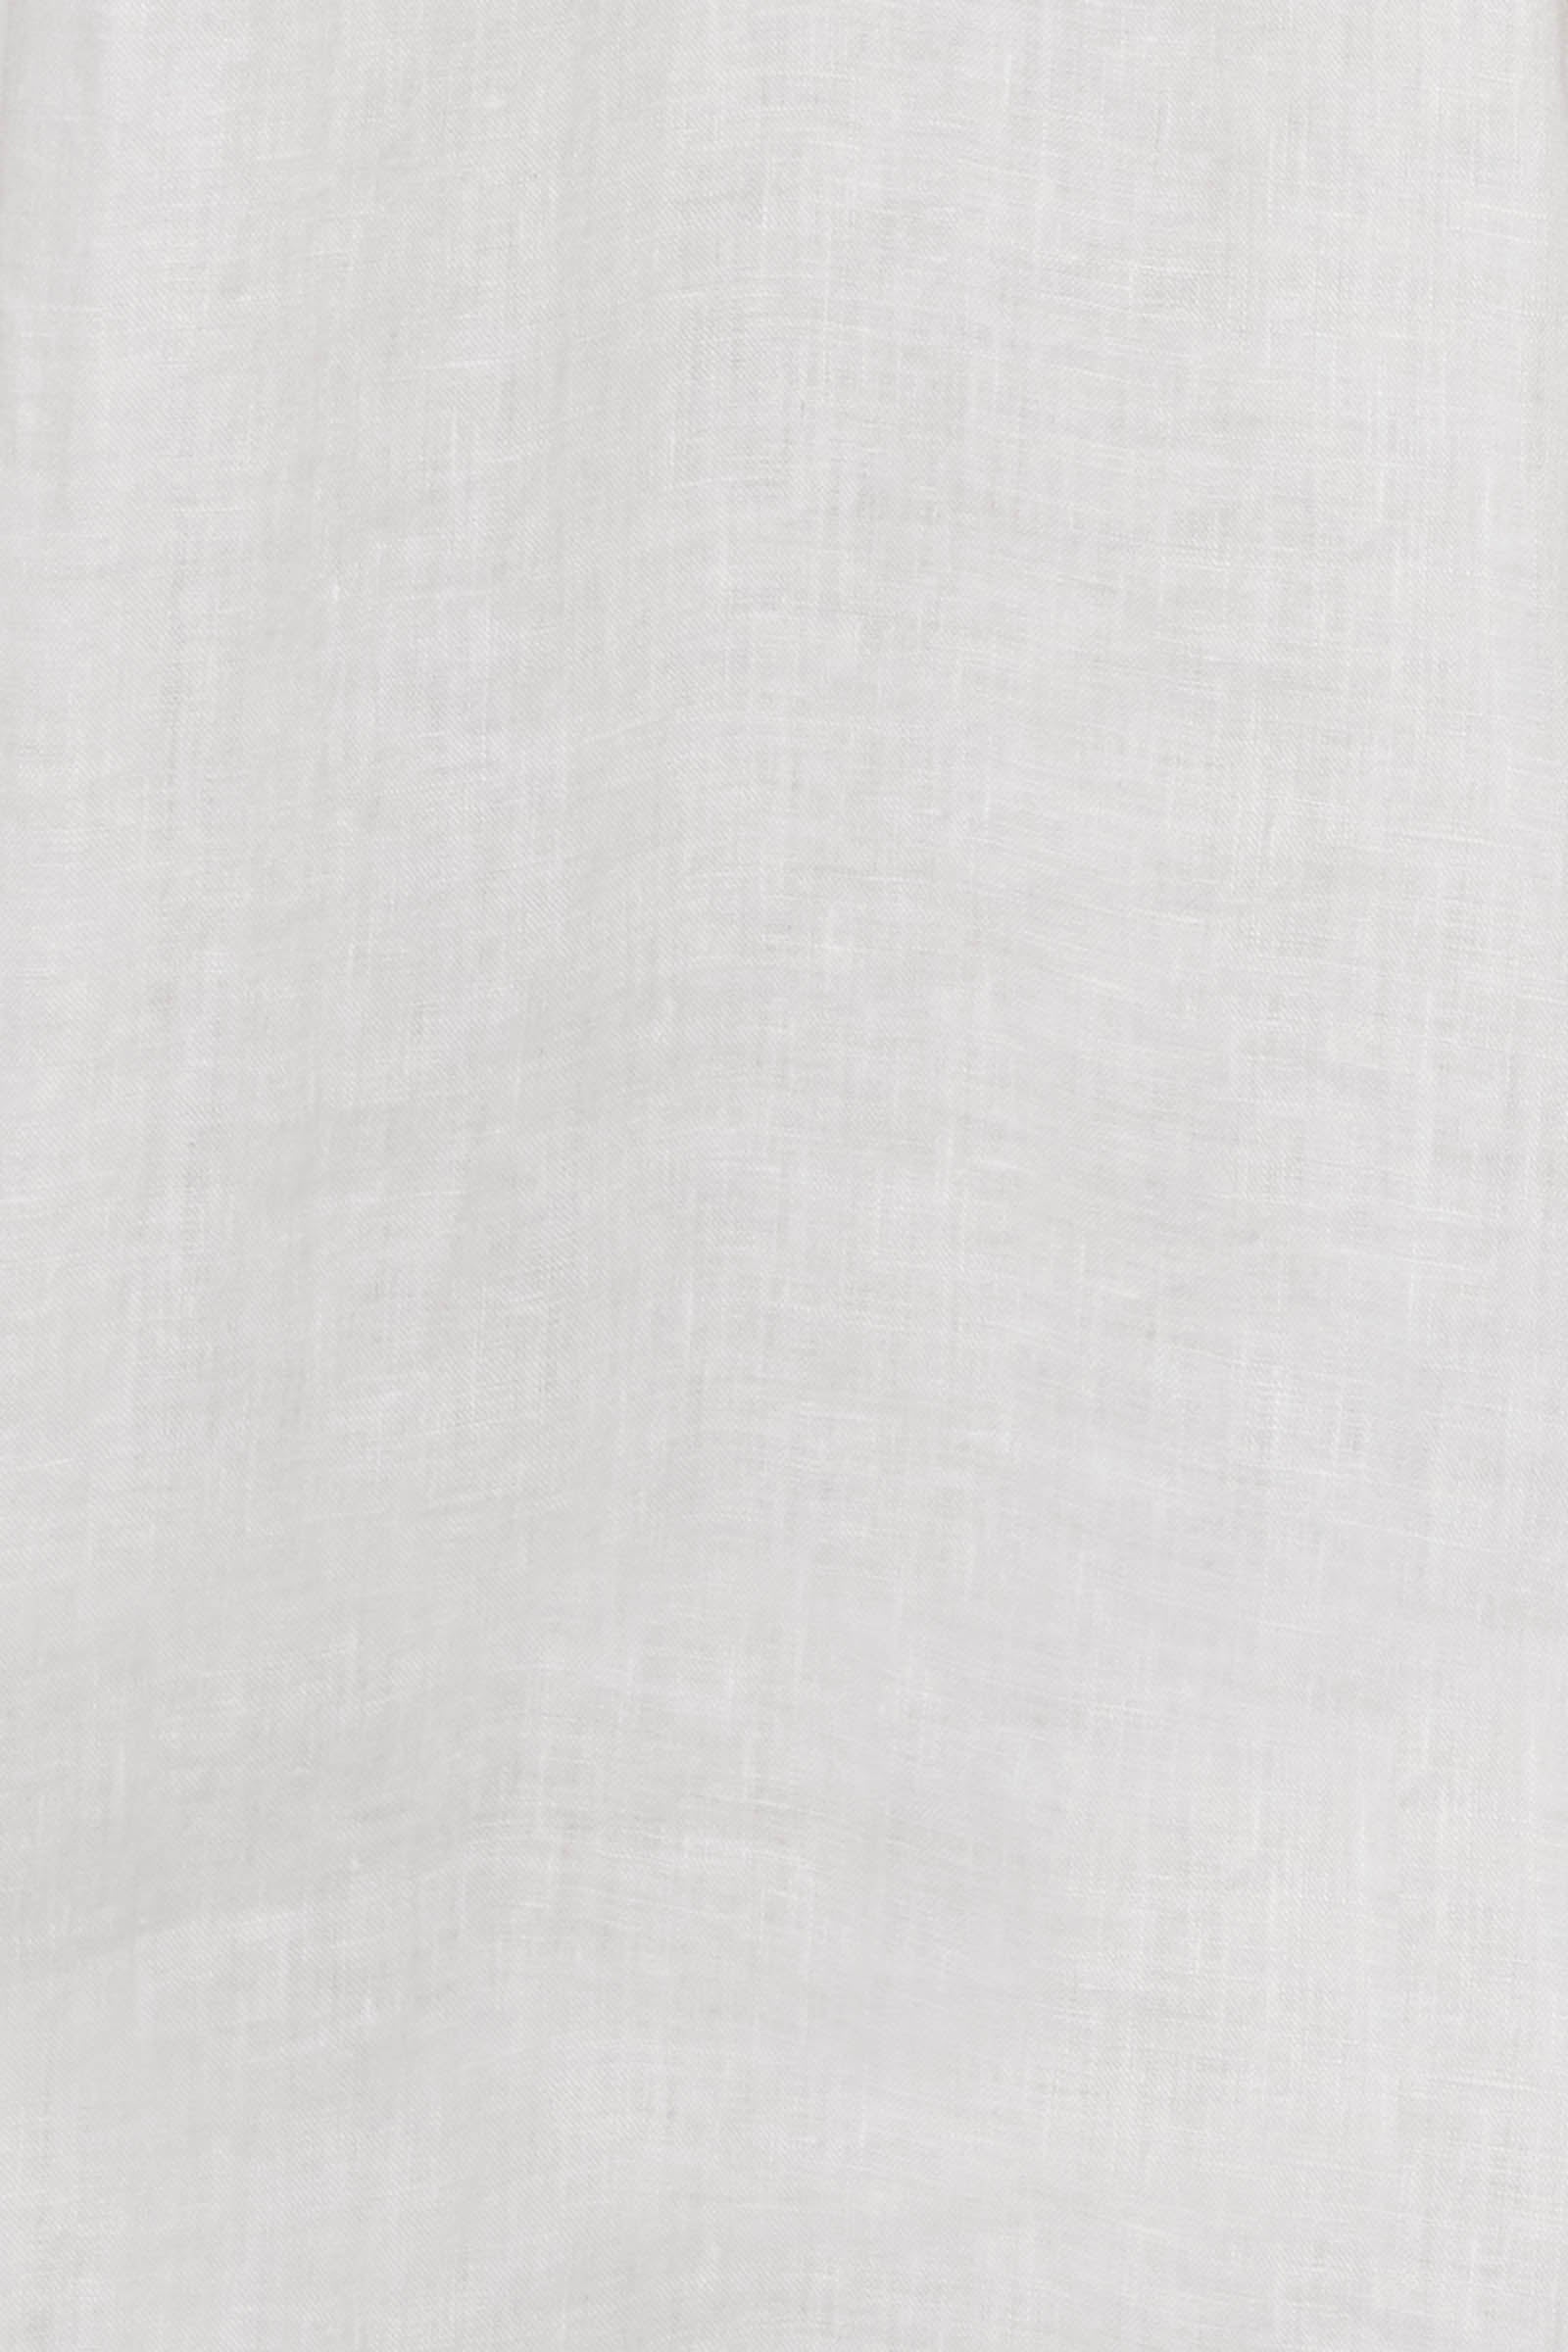 La Vie Tie Maxi - Blanc - eb&ive Clothing - Dress Strappy Maxi Linen